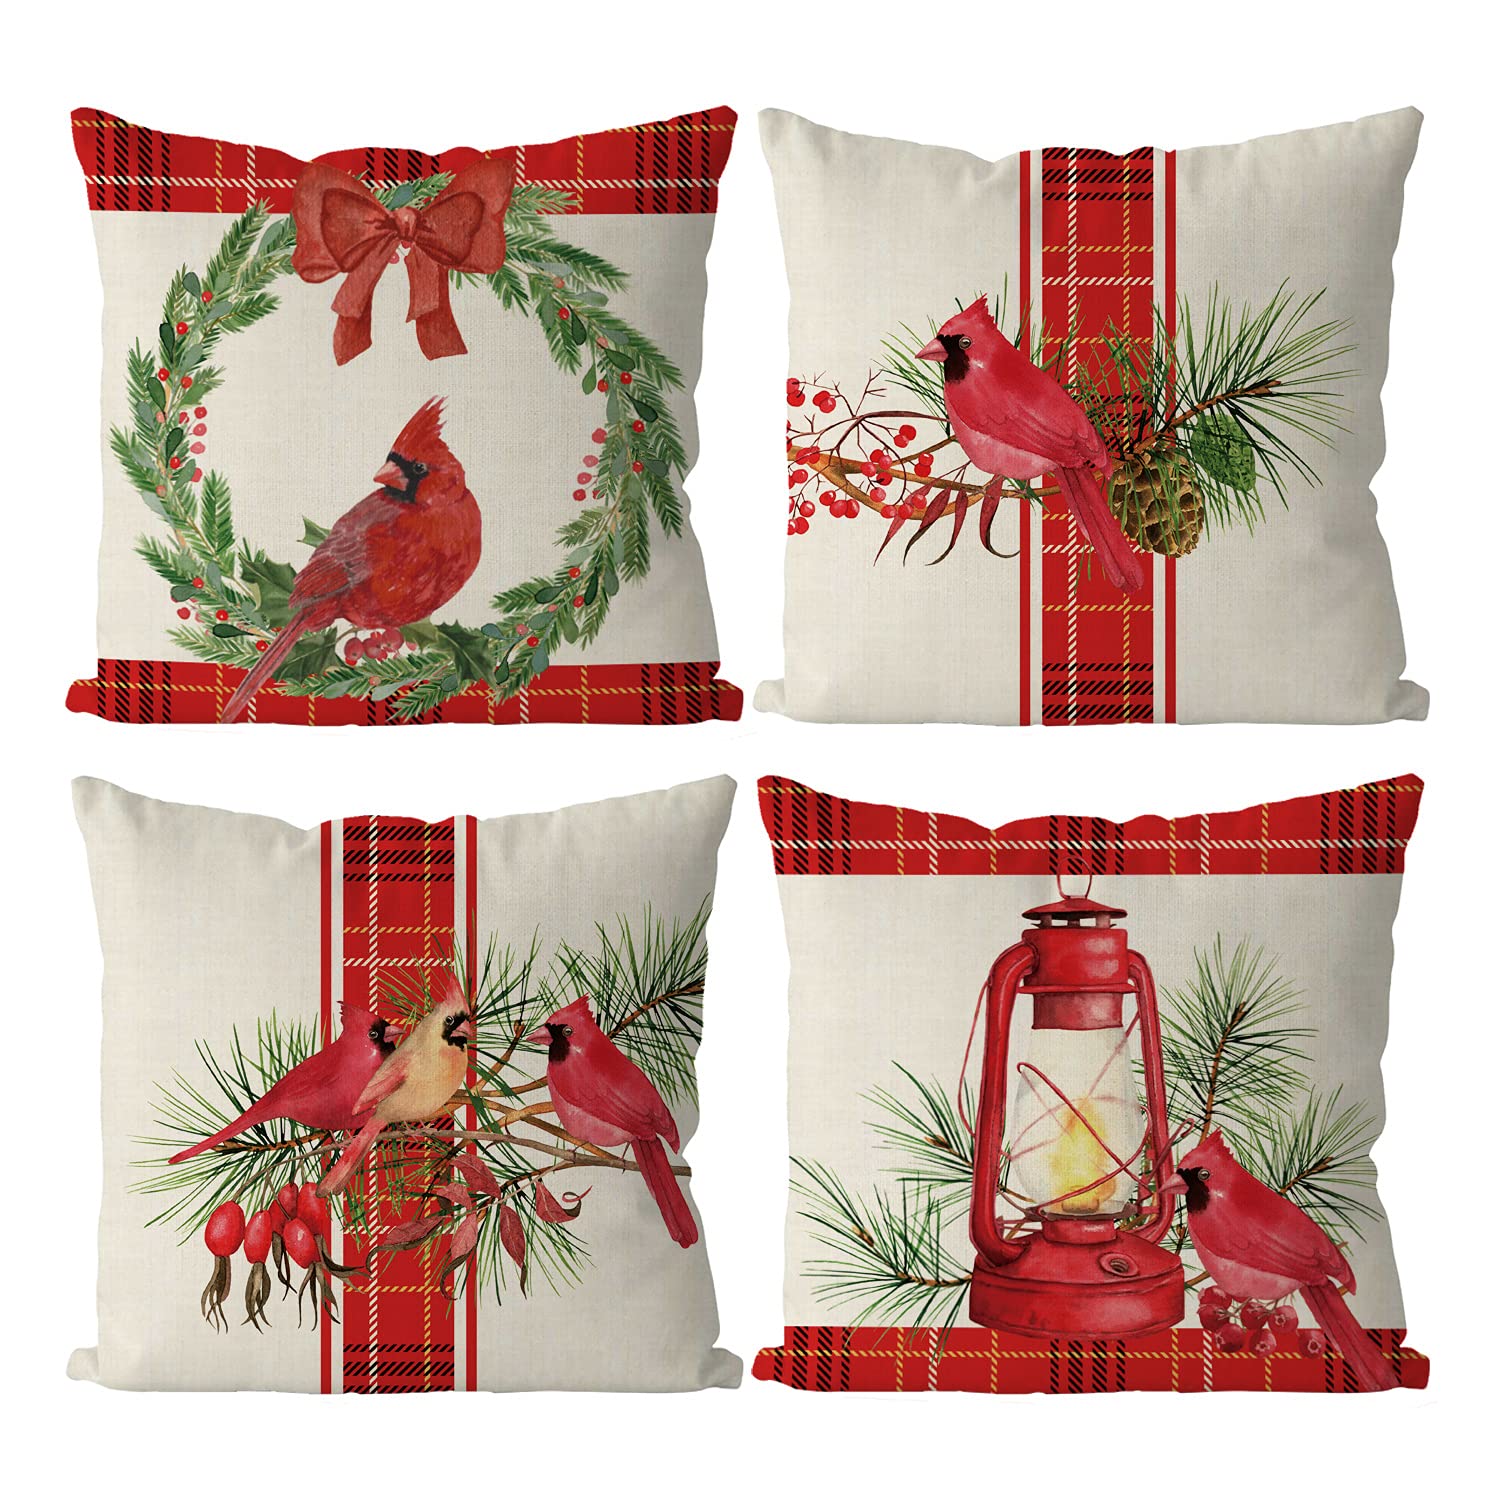 GAGEC Christmas Pillow Covers 16 x 16 Inch Set of 4 Christmas Cardinal Red Buffalo Check Farmhouse Throw Pillowcase Party Decora